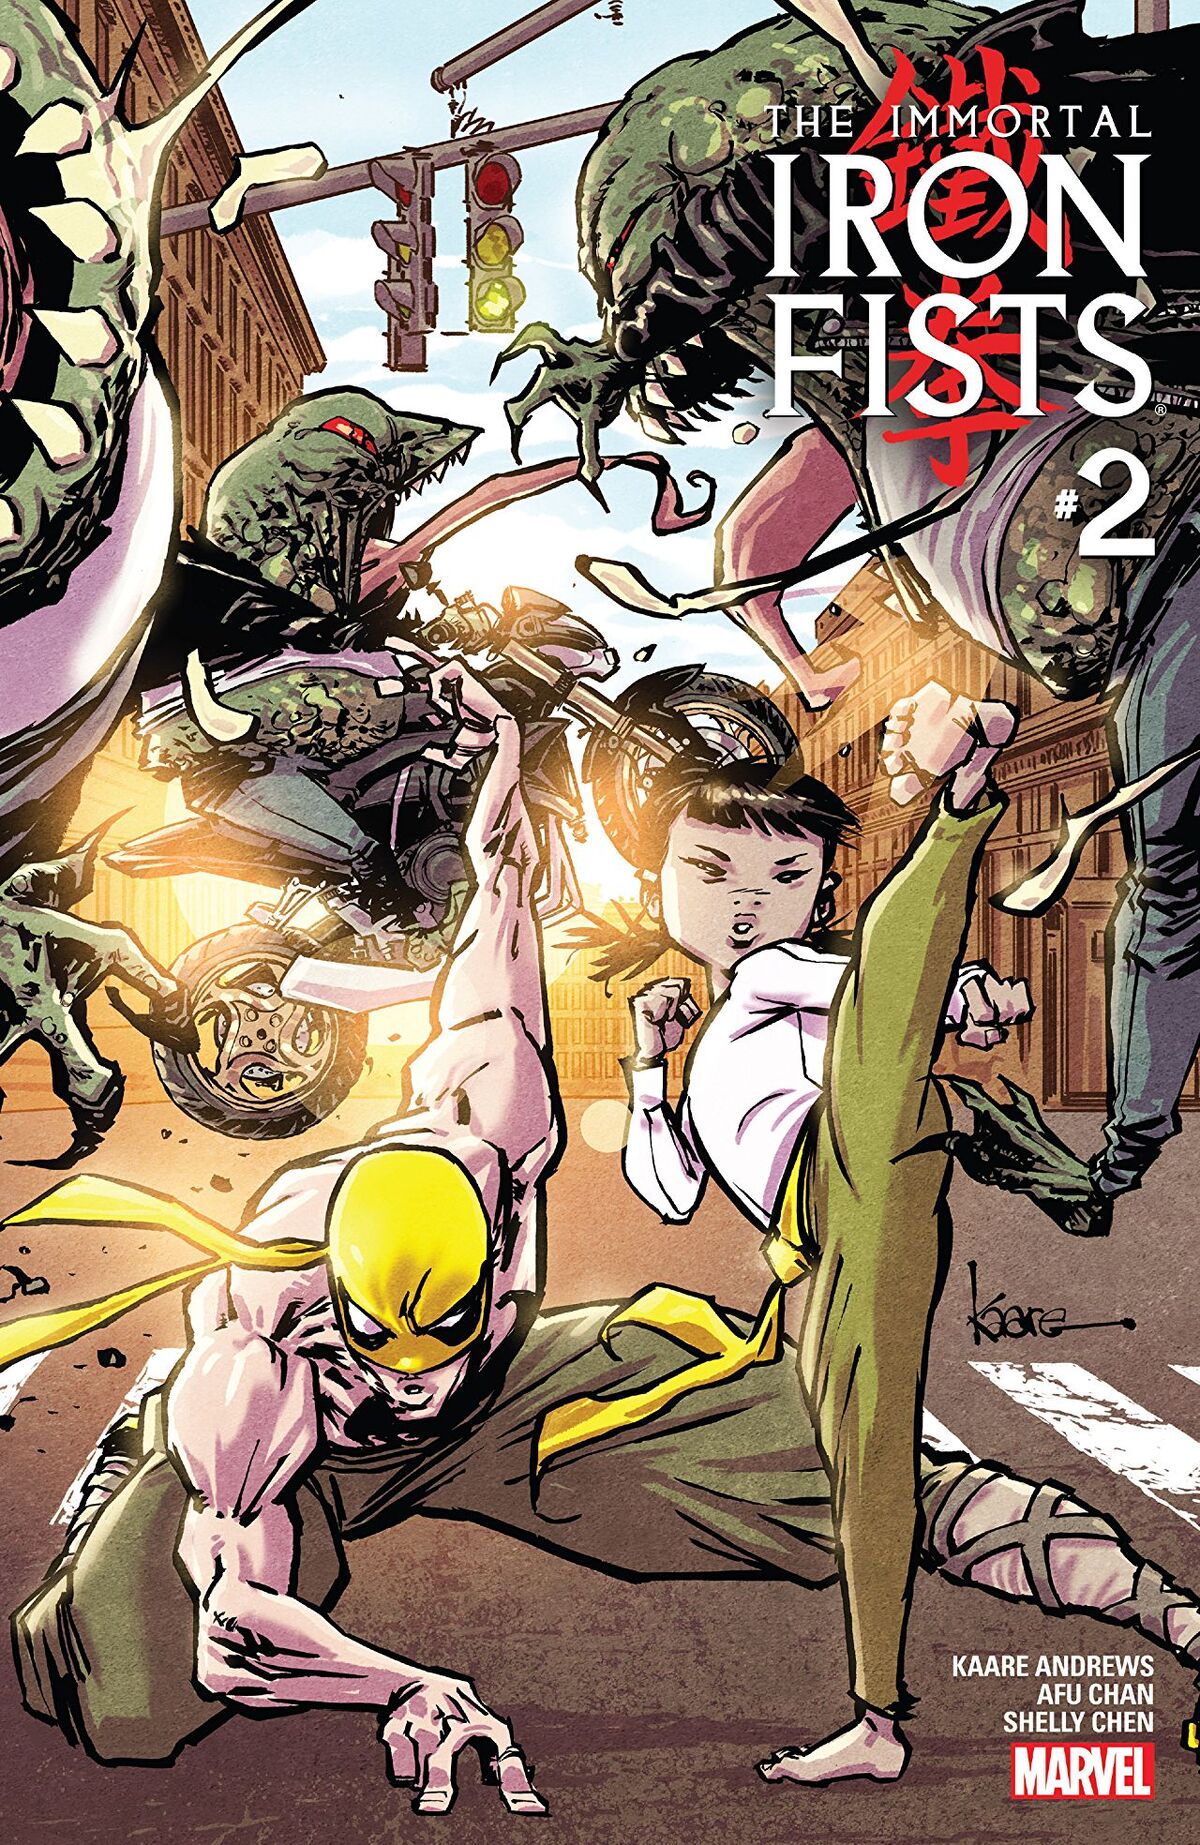 Iron Fist Vol 1 13, Marvel Database